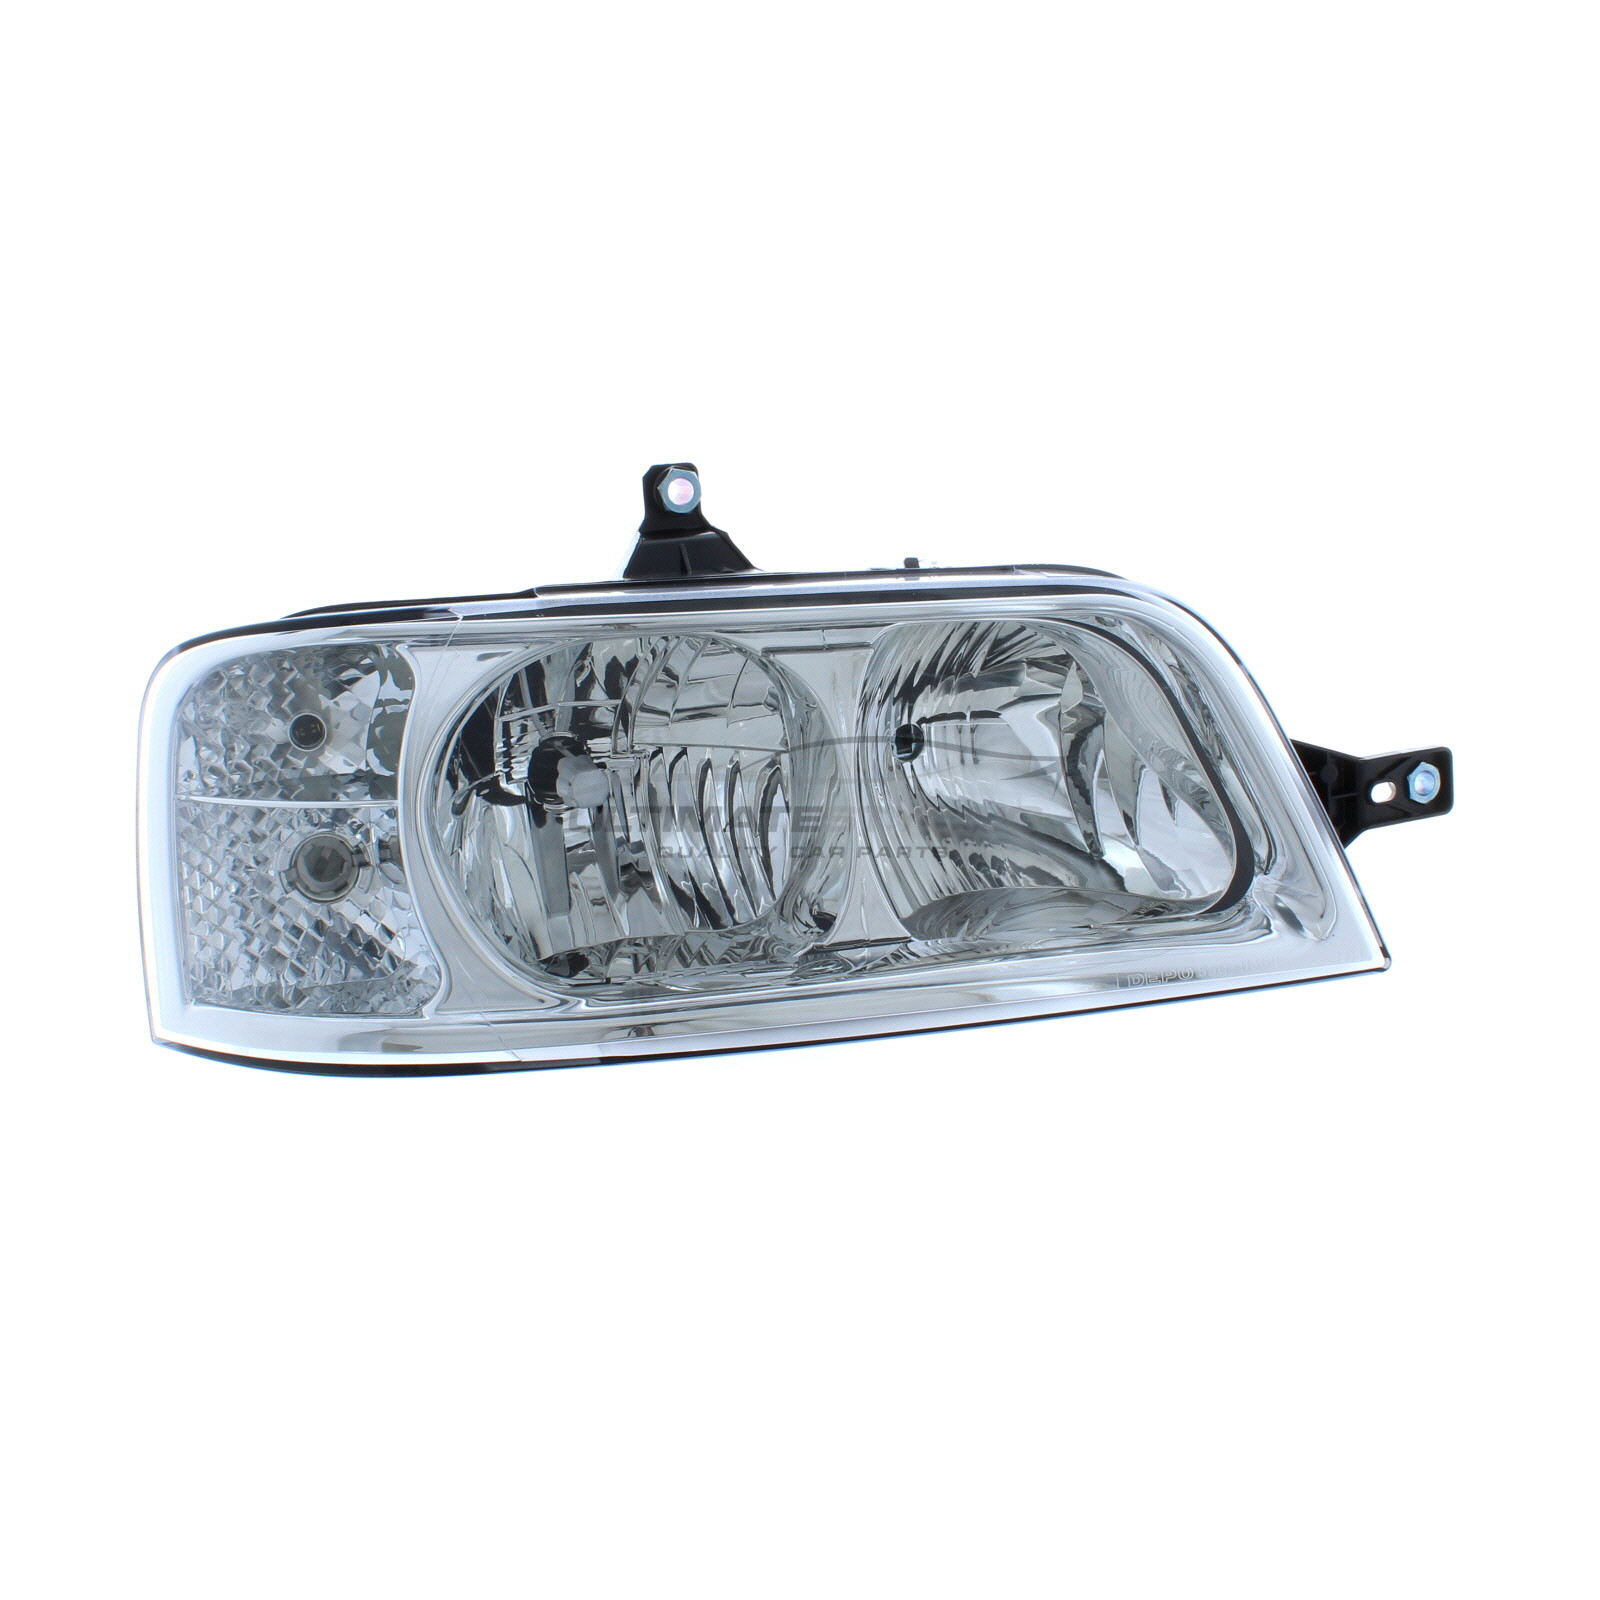 Headlight / Headlamp for Fiat Ducato